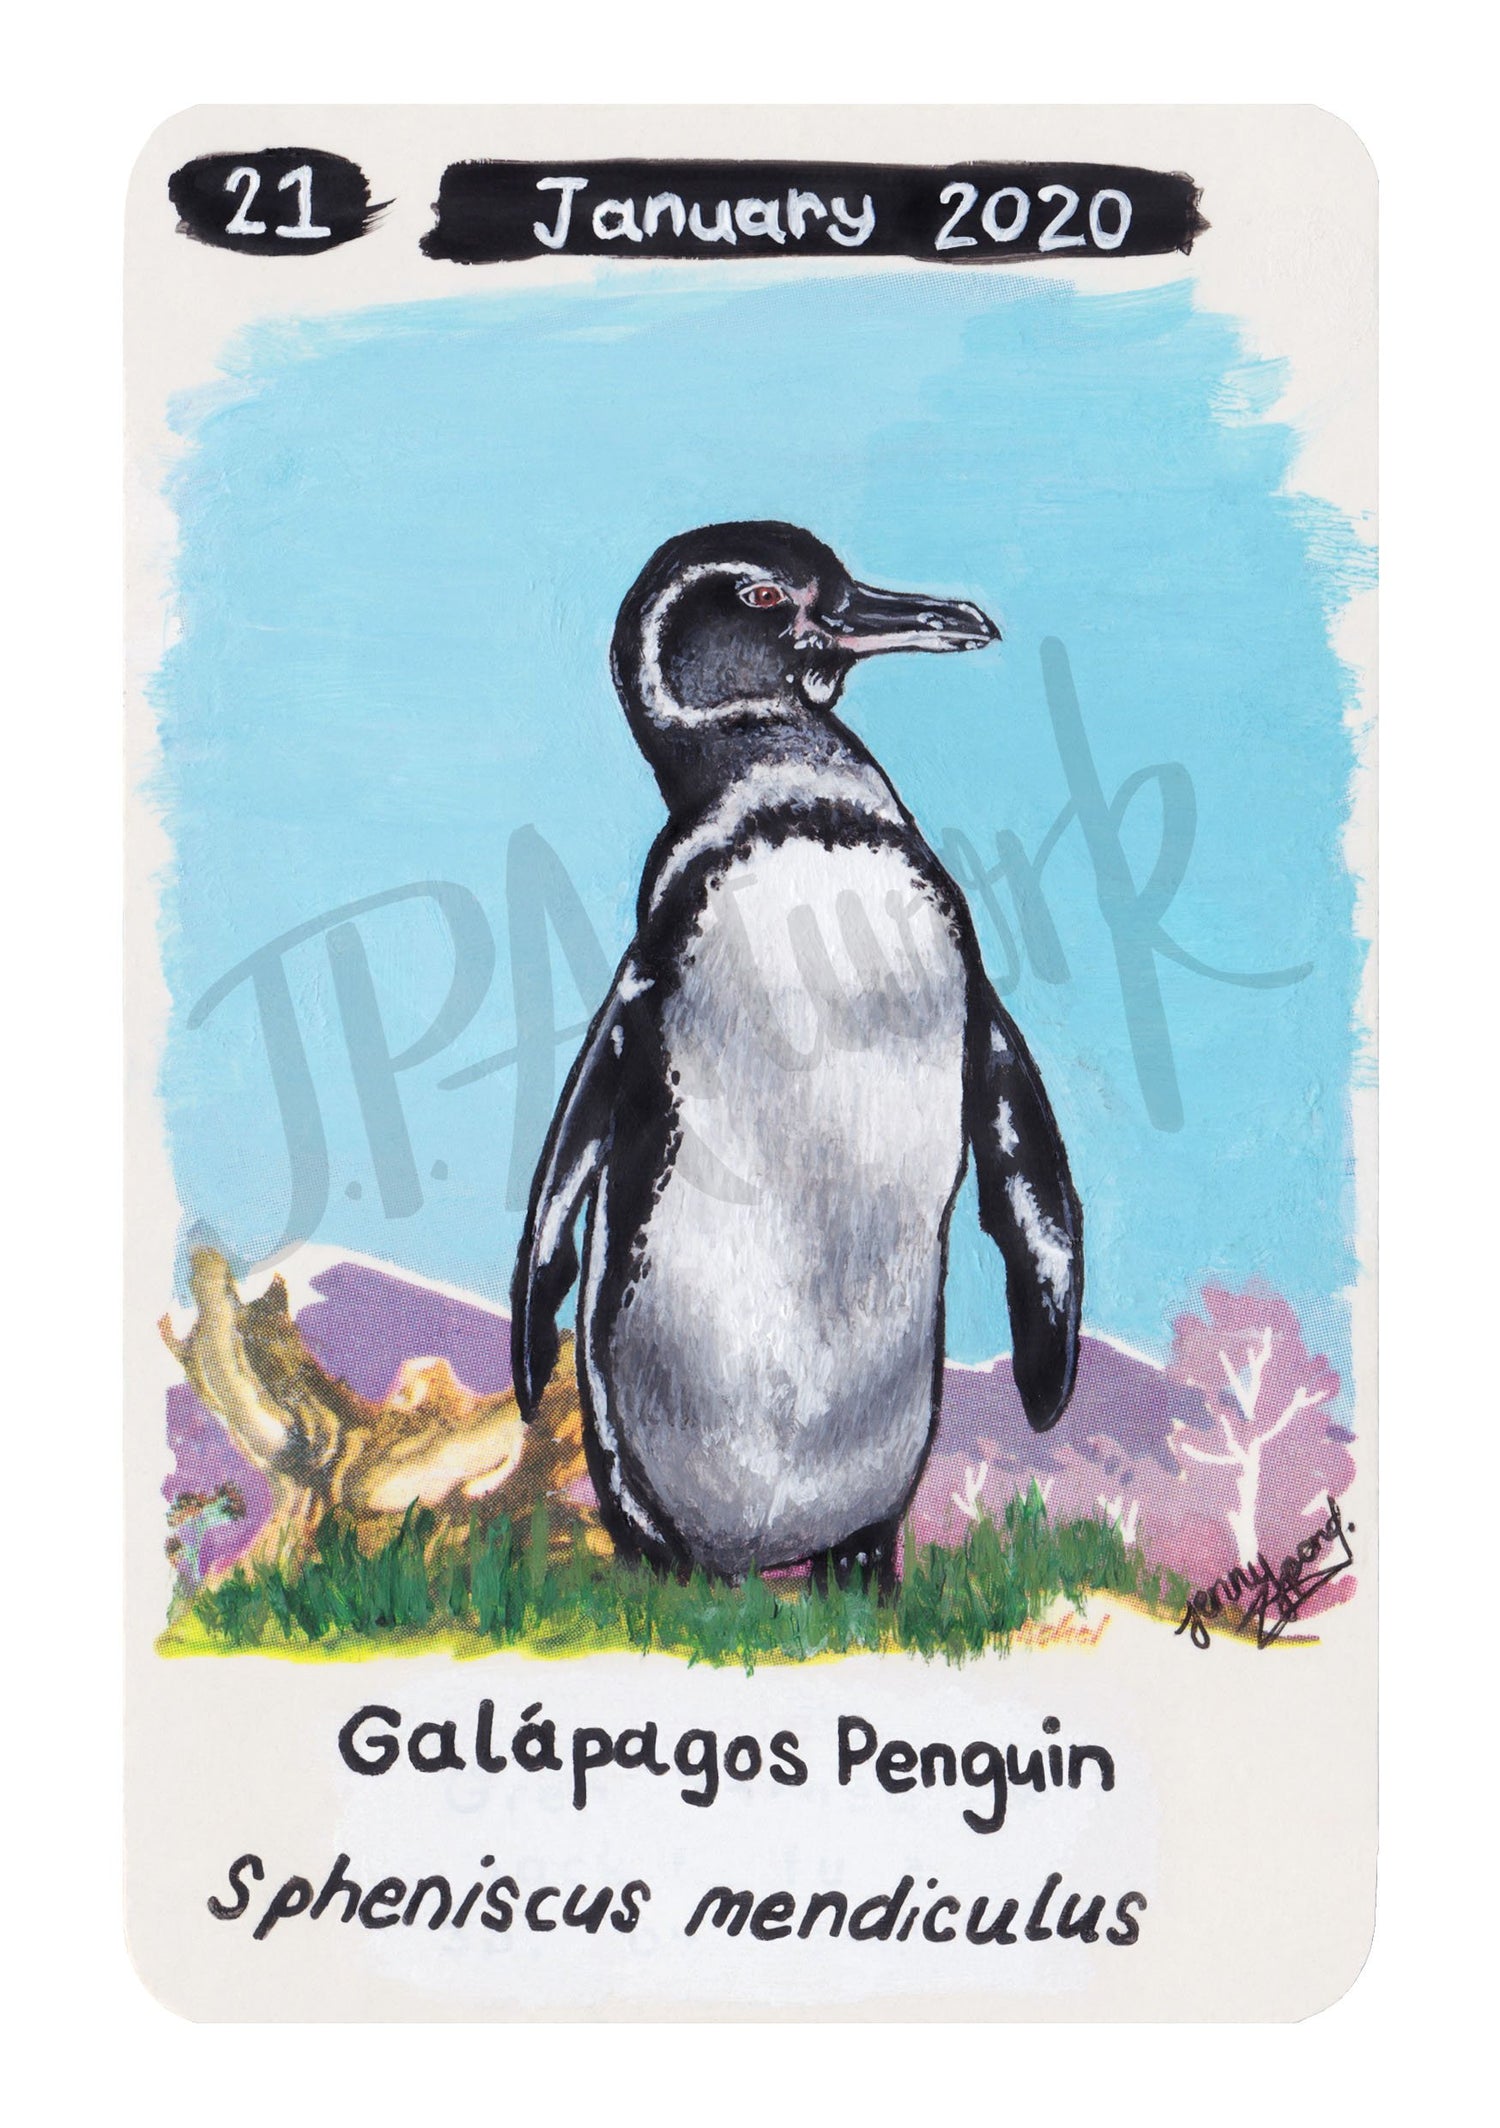 Galápagos Penguin Limited Edition A5 Hemp Paper Print by Jenny Pond, JPArtwork